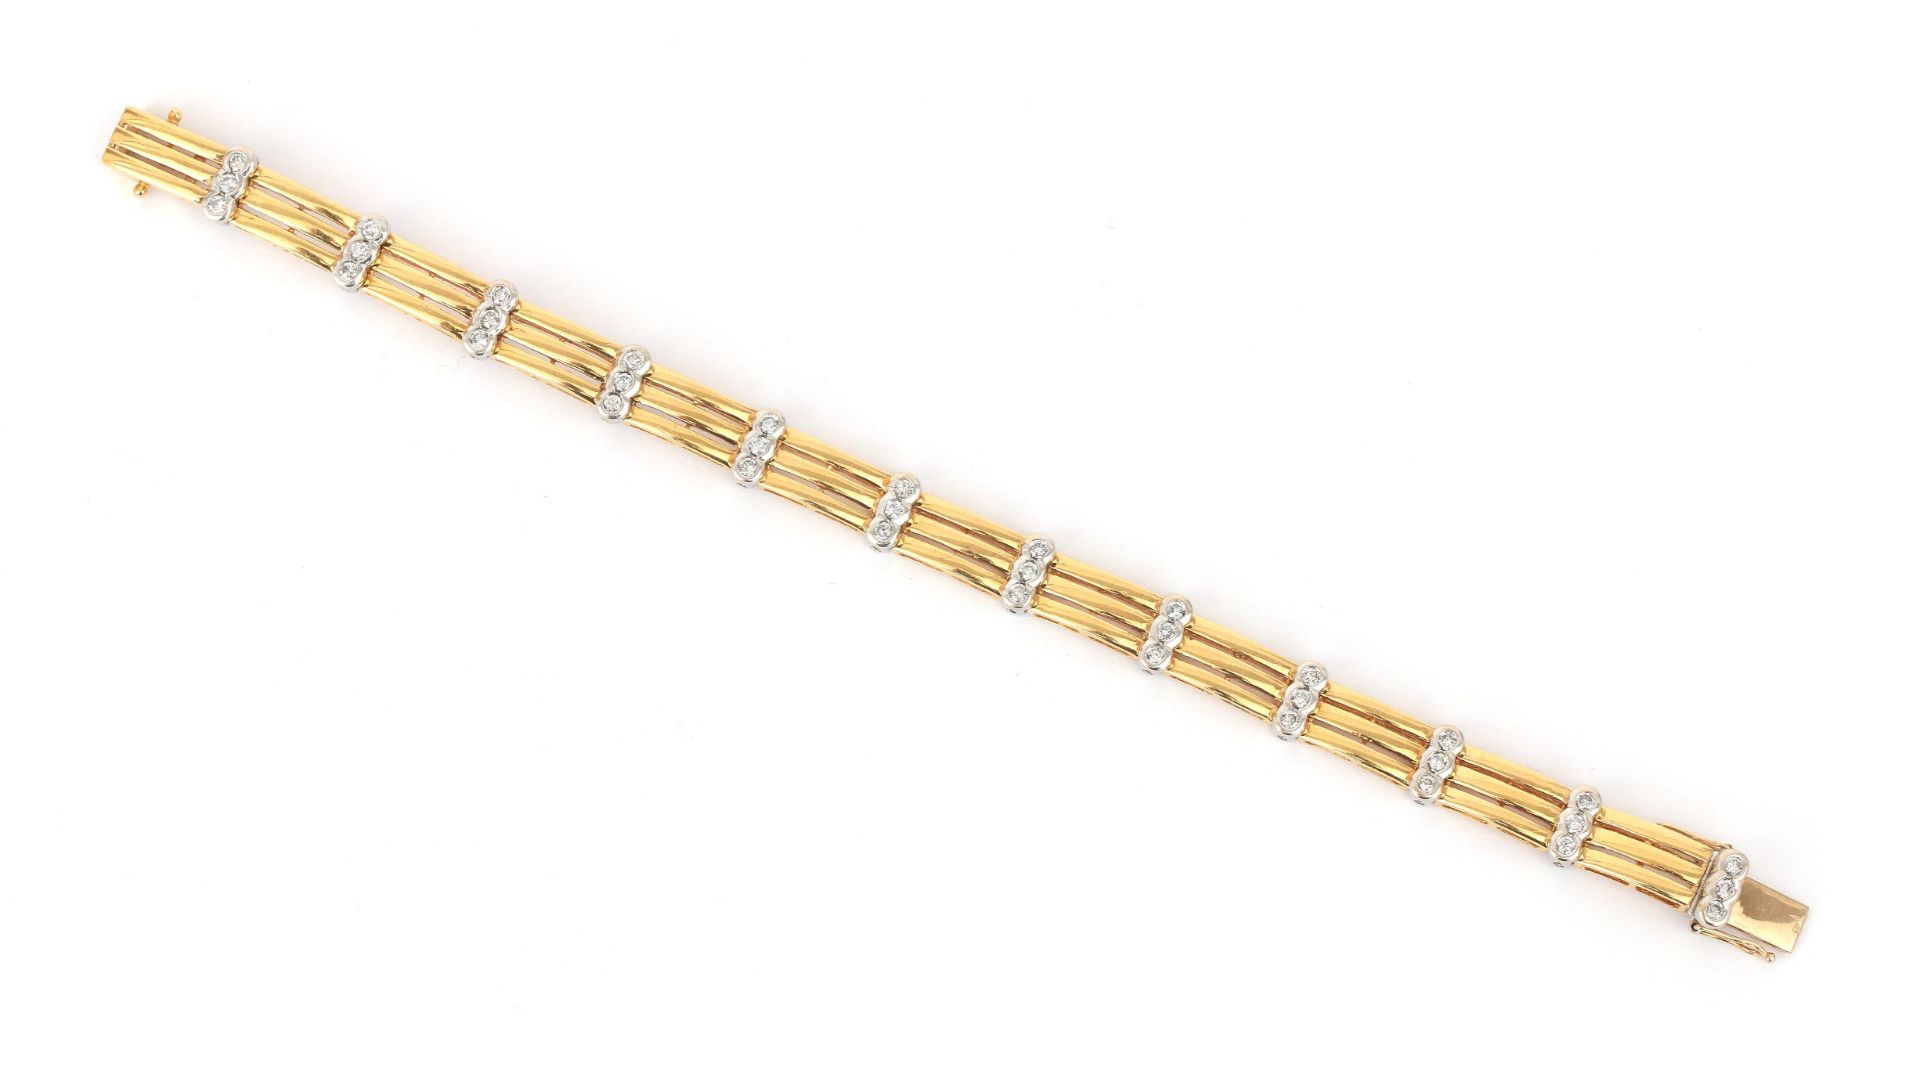 An 18 karat gold two tone diamond link bracelet - Image 2 of 3